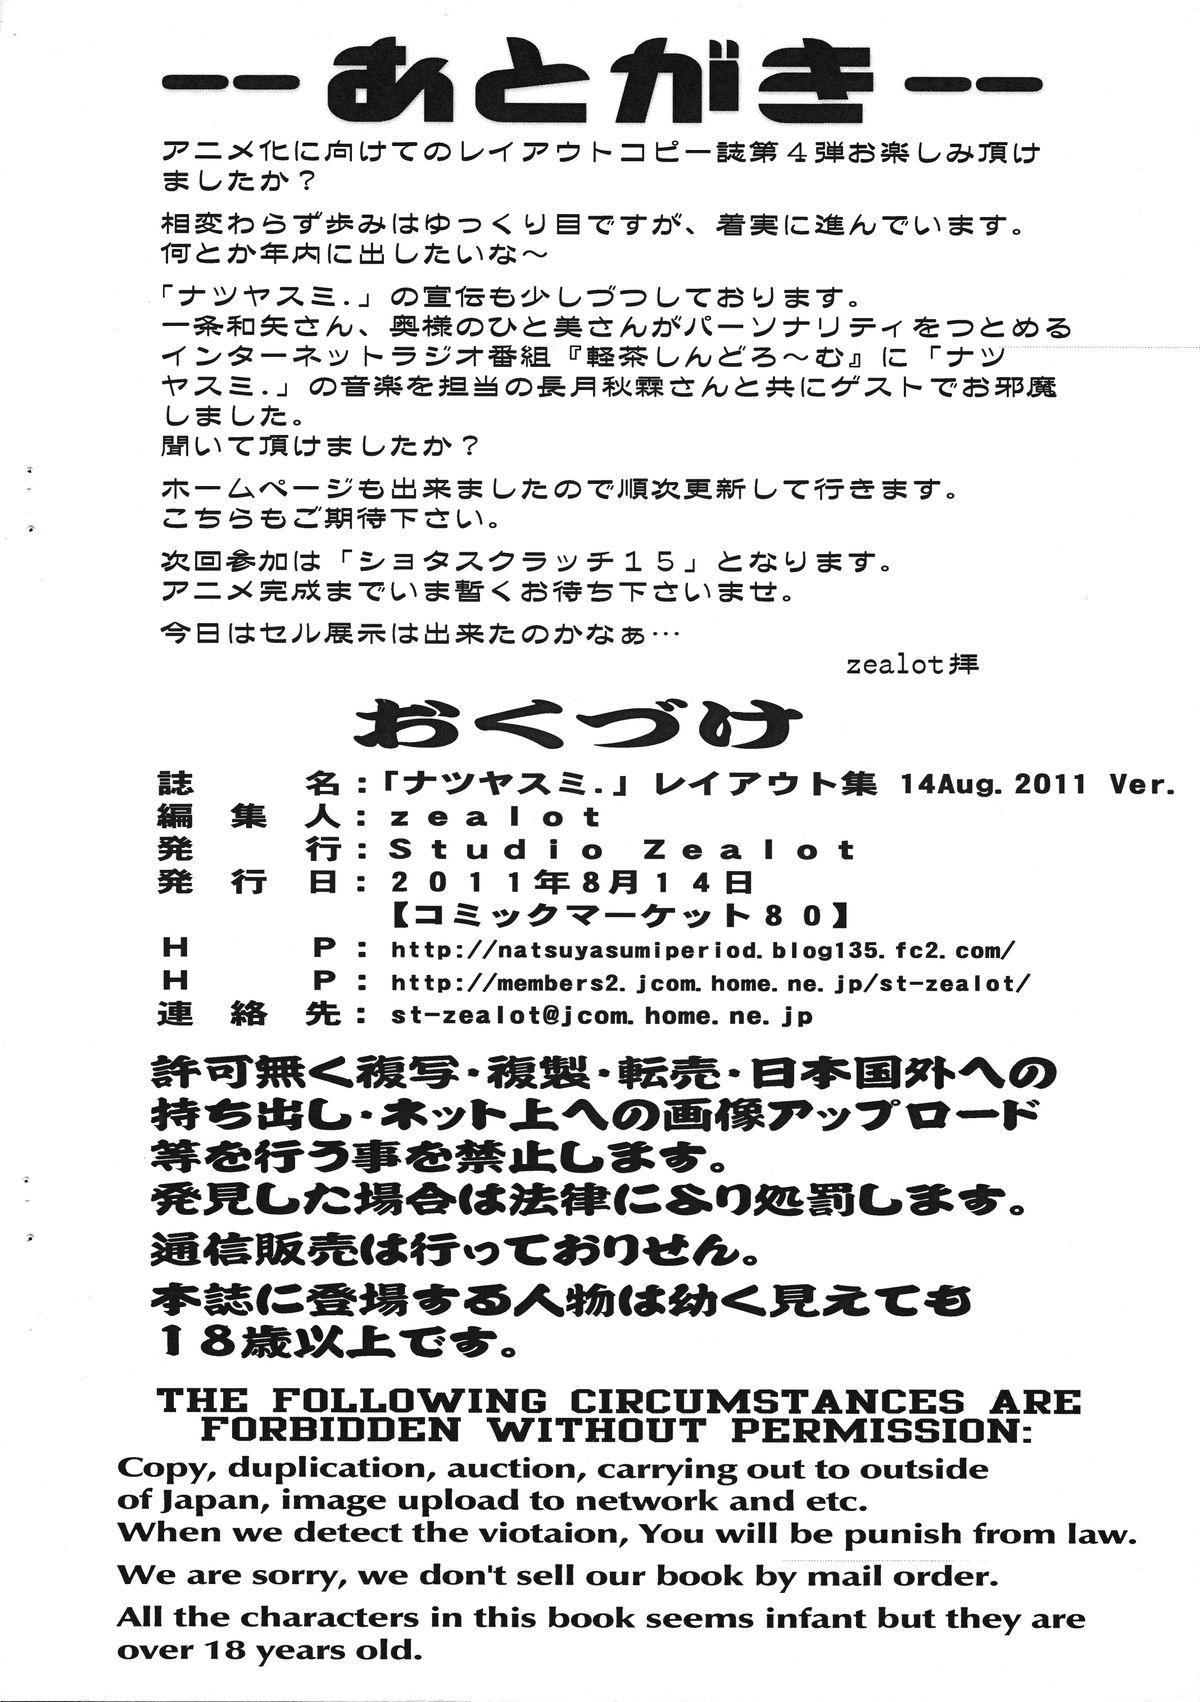 Glam Natsuyasumi Period Layout Shuu 14 Aug. 2011 Ver. Chilena - Page 11